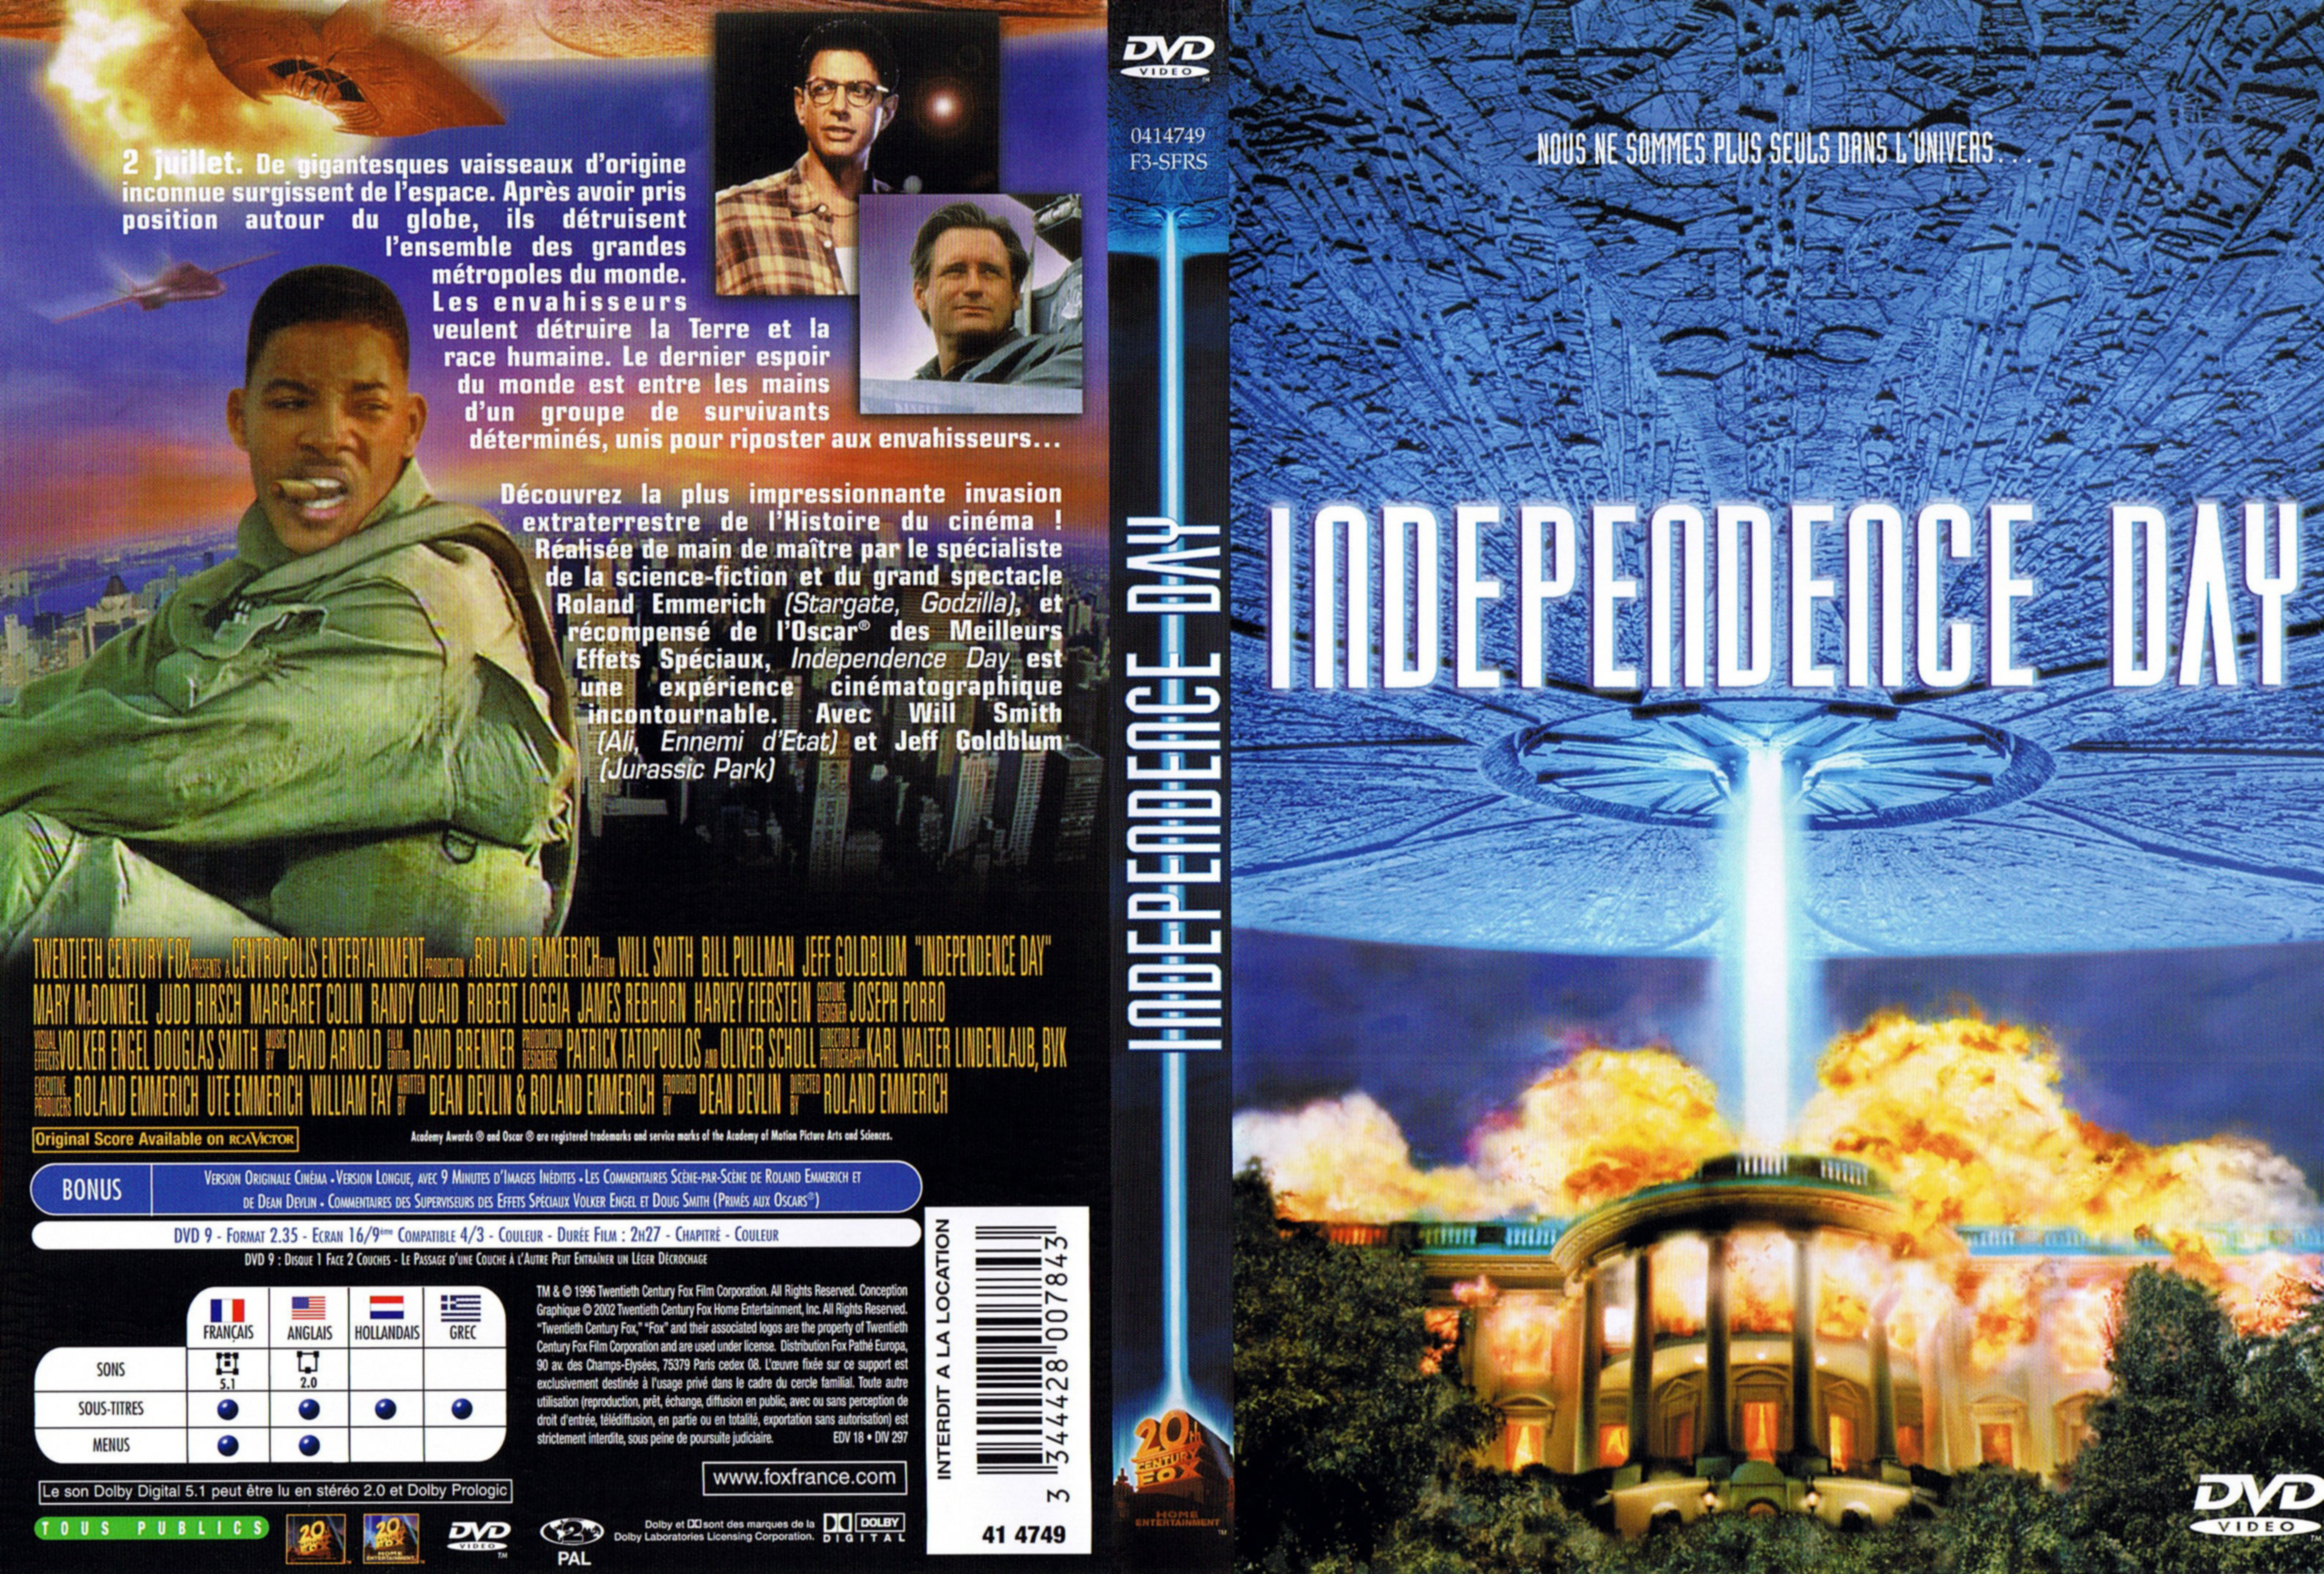 Jaquette DVD Independence day v4